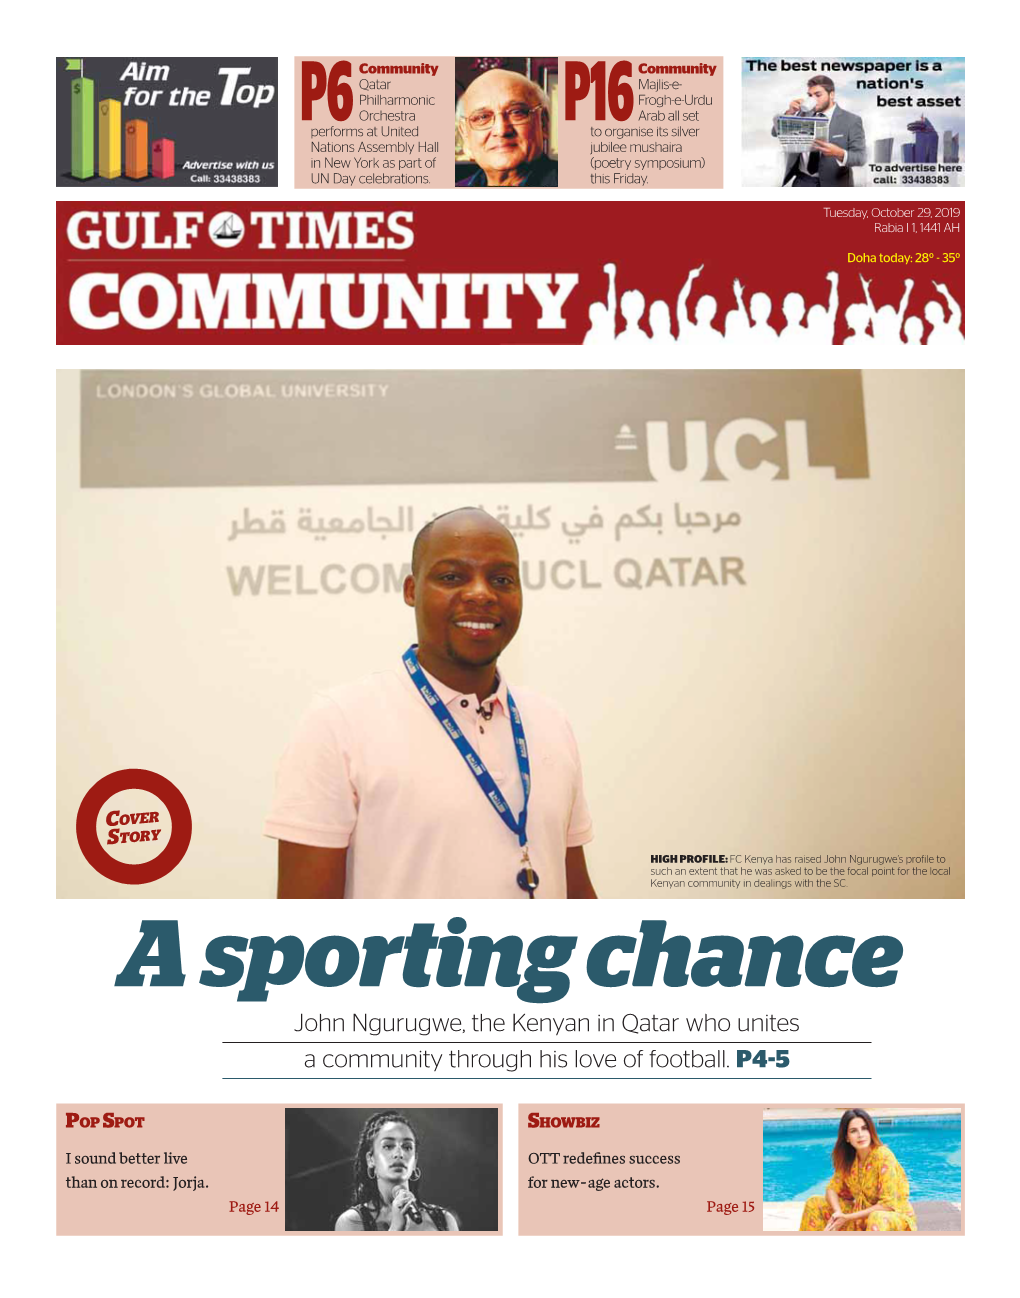 John Ngurugwe, the Kenyan in Qatar Who Unites a Community Through His Love of Football